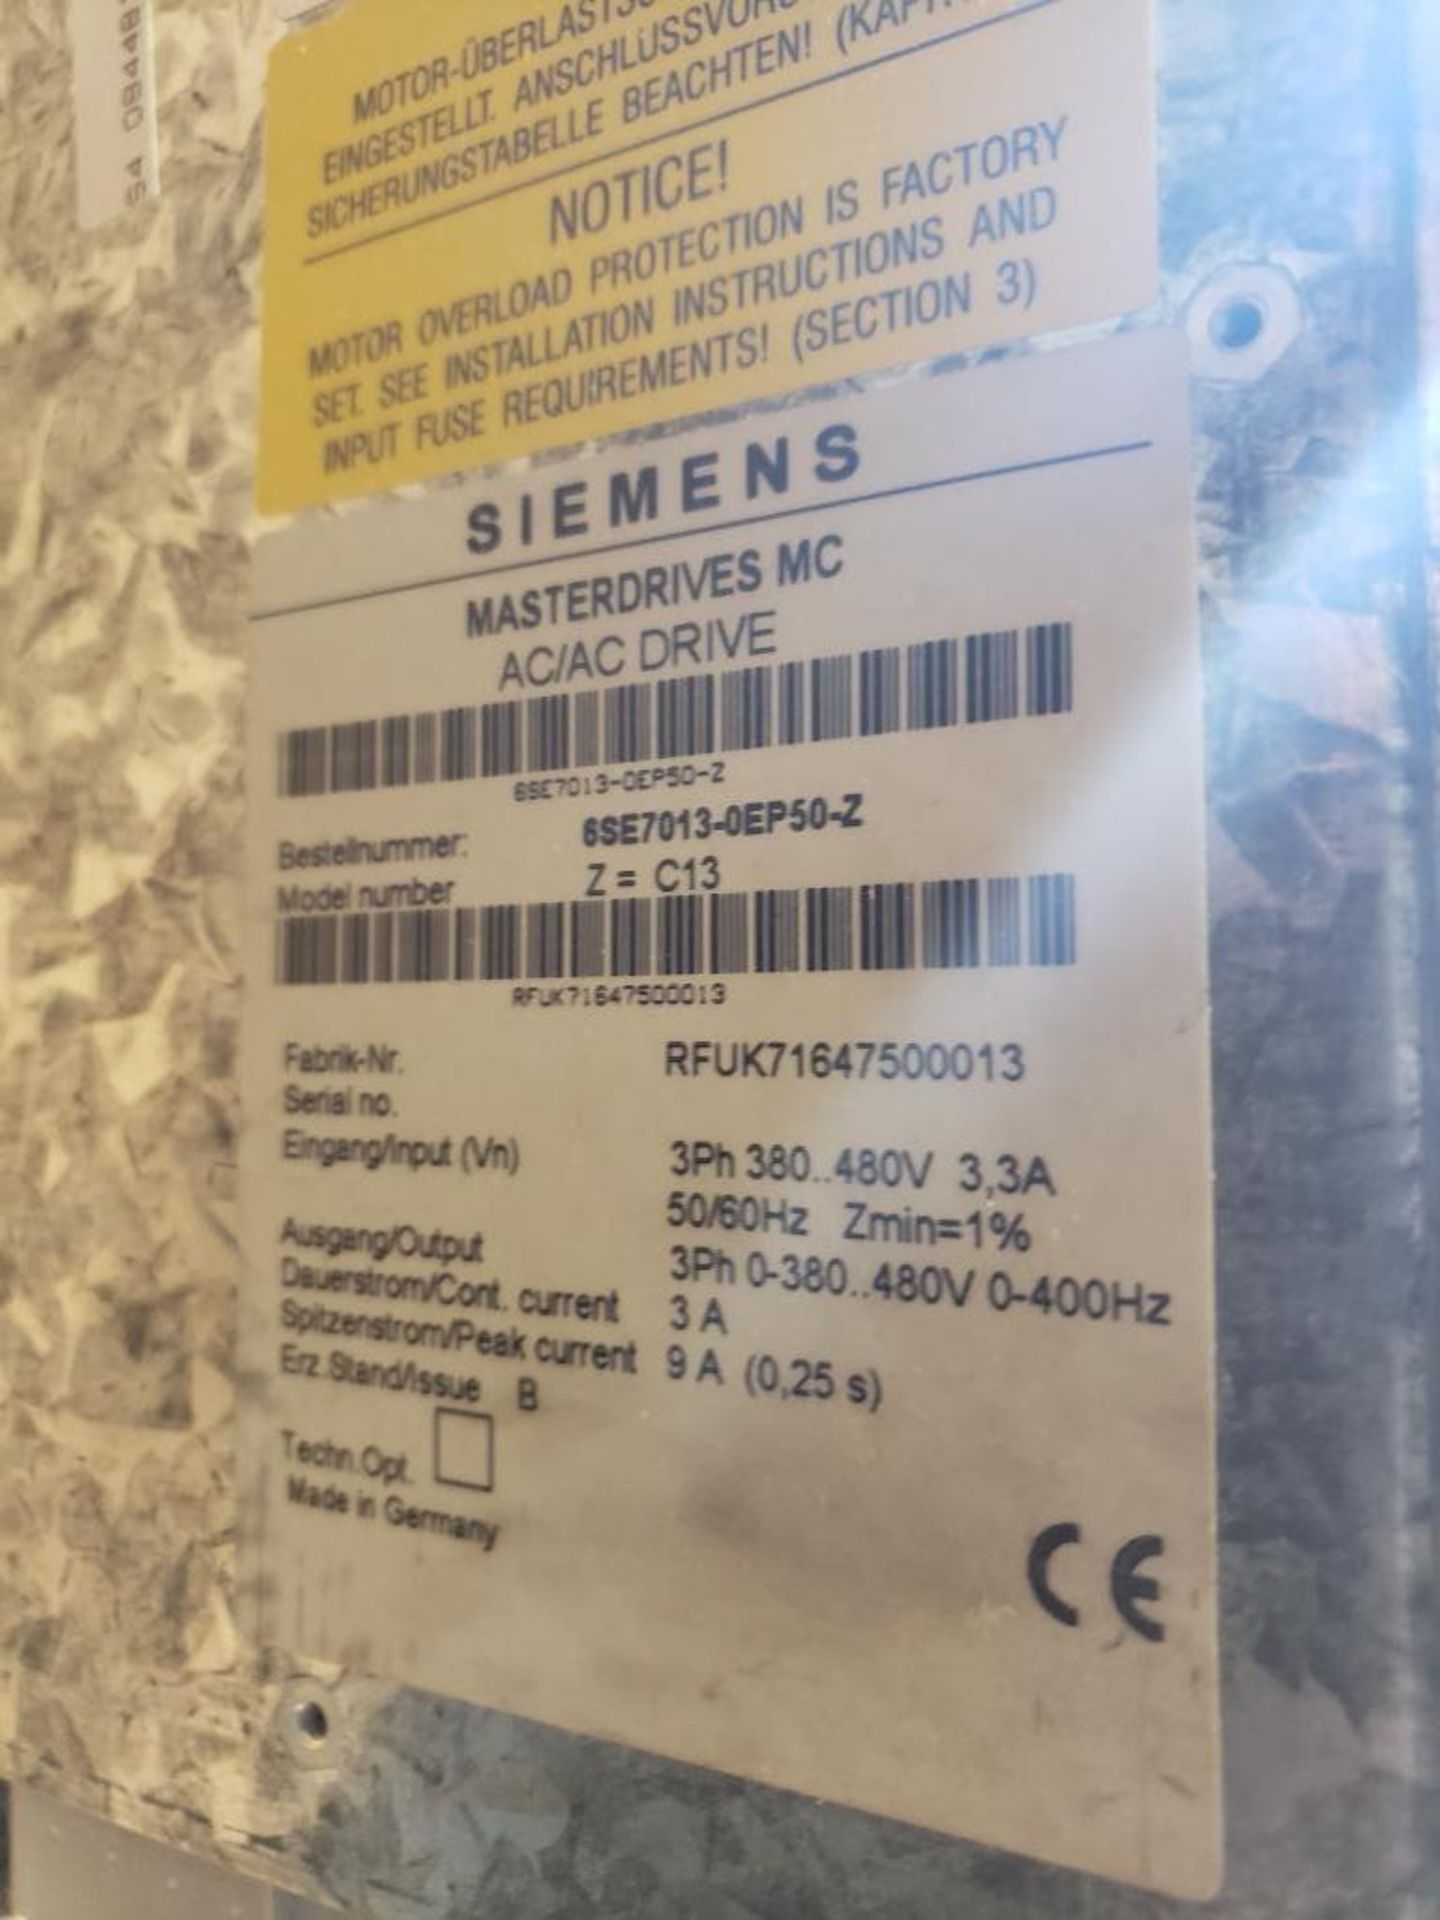 Siemens Masterdrives MC DC/AC drive. 6SE7013-0EP50-Z.. - Image 5 of 5